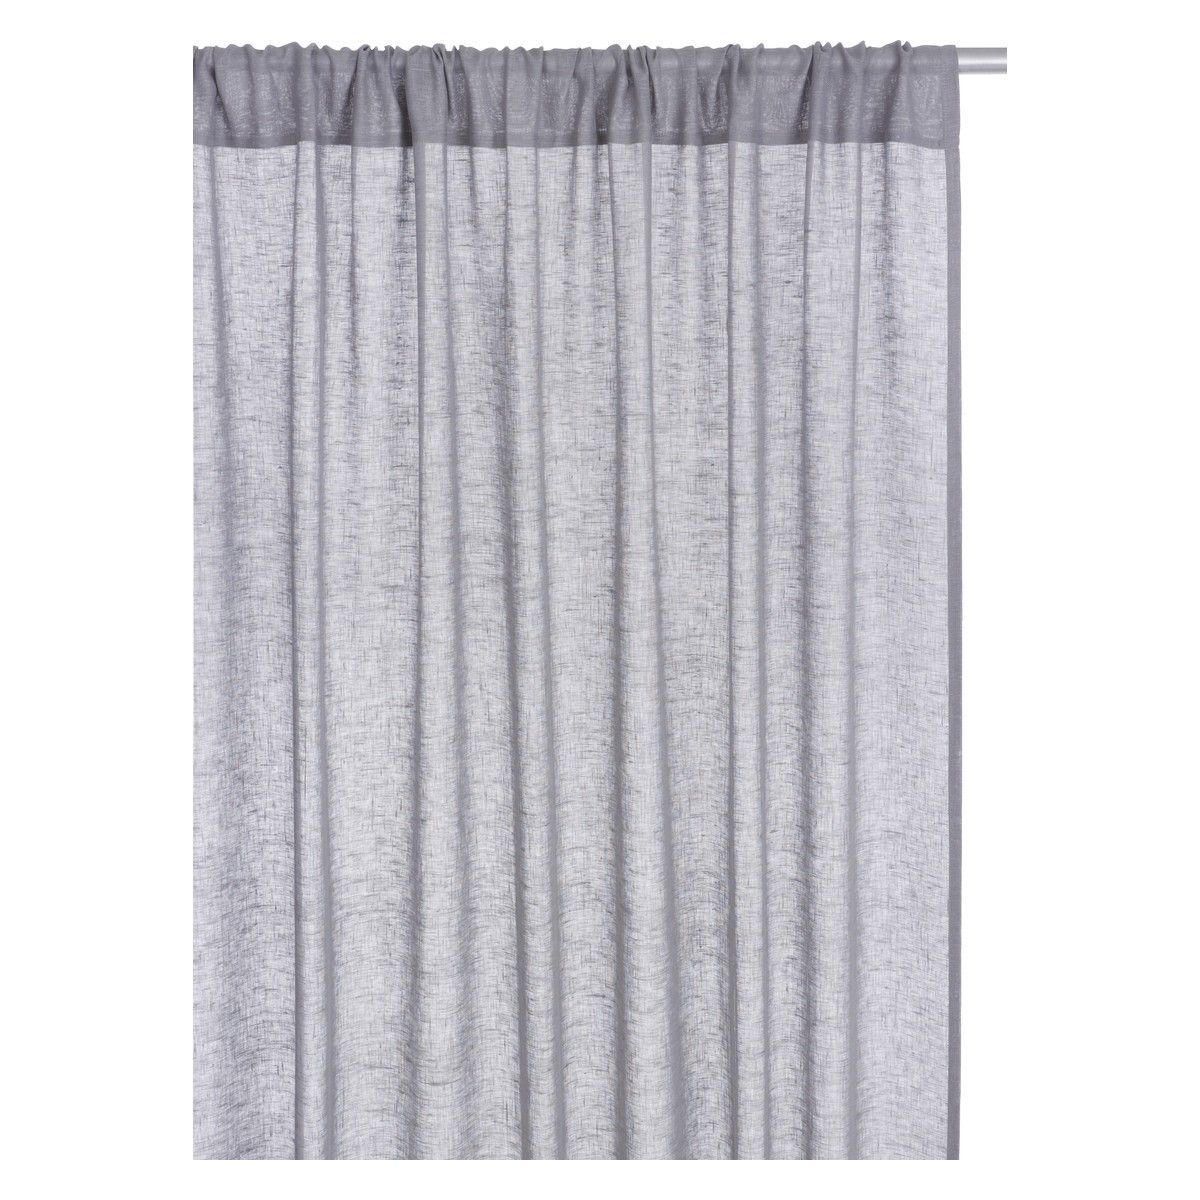 Curtains Ready Made Curtains Roller Blinds At Habitat Uk Regarding Natural Linen Drapes (View 15 of 15)